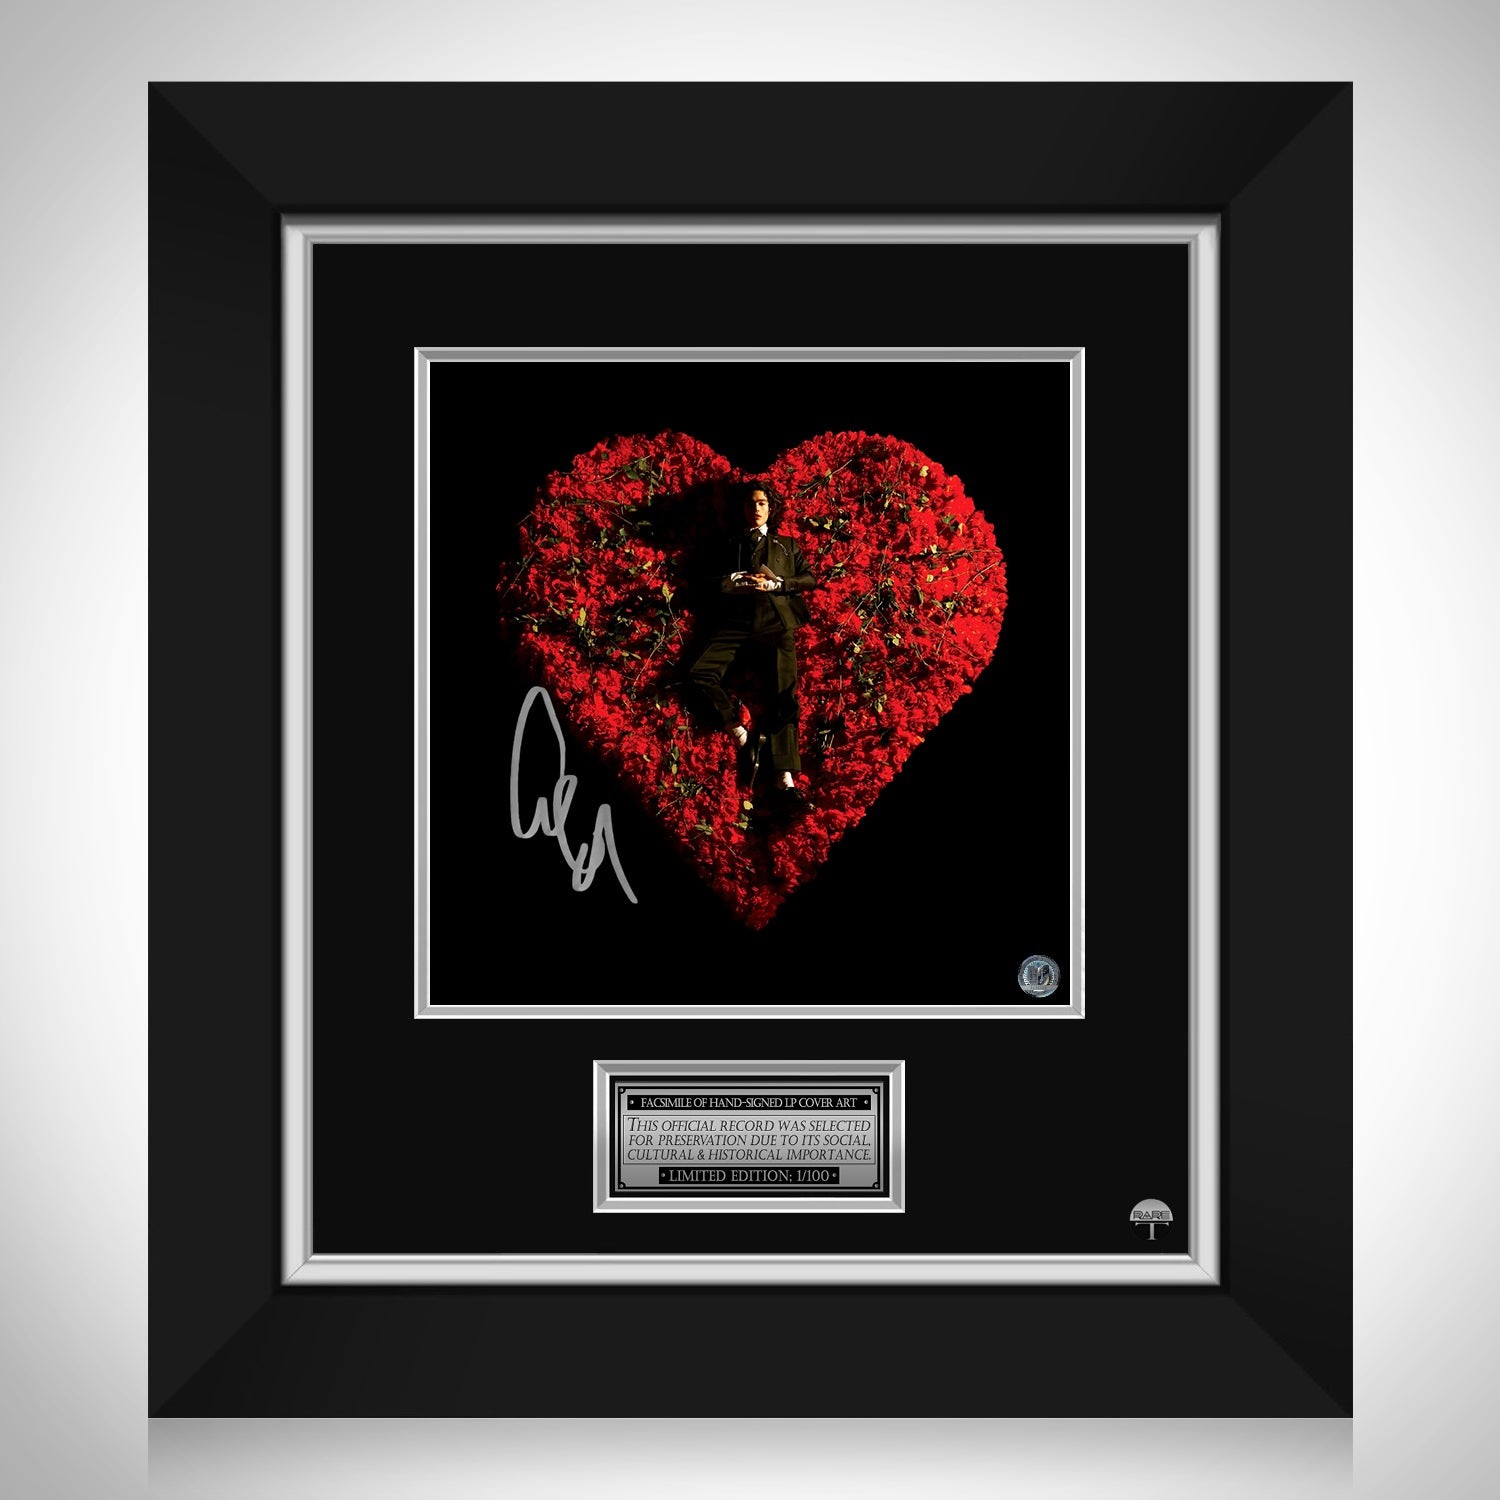 Conan Gray Signed 11x14 Framed Superache CD Autographed ACOA